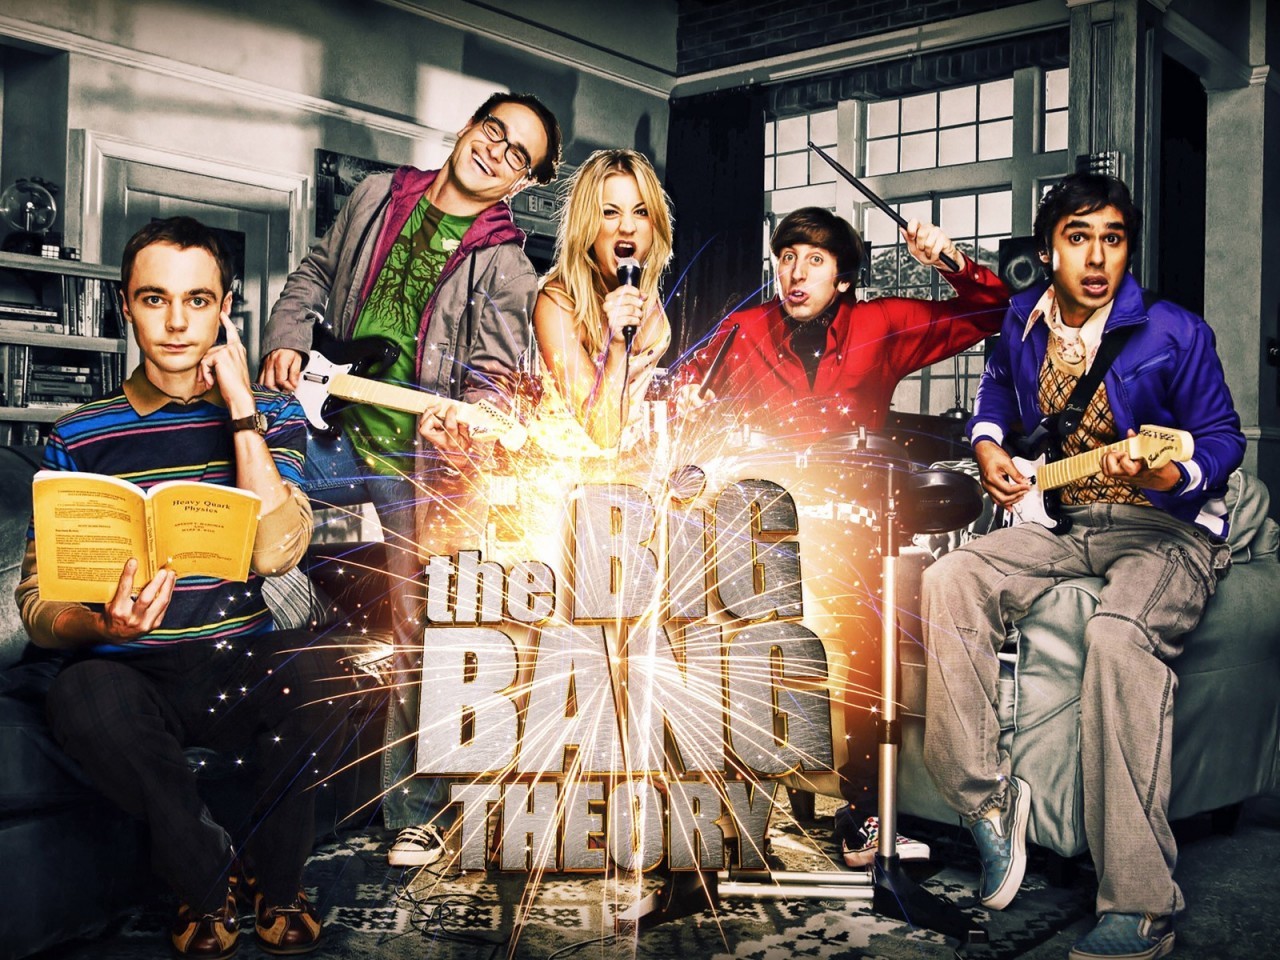 Popular Big Bang Theory Image for Phone